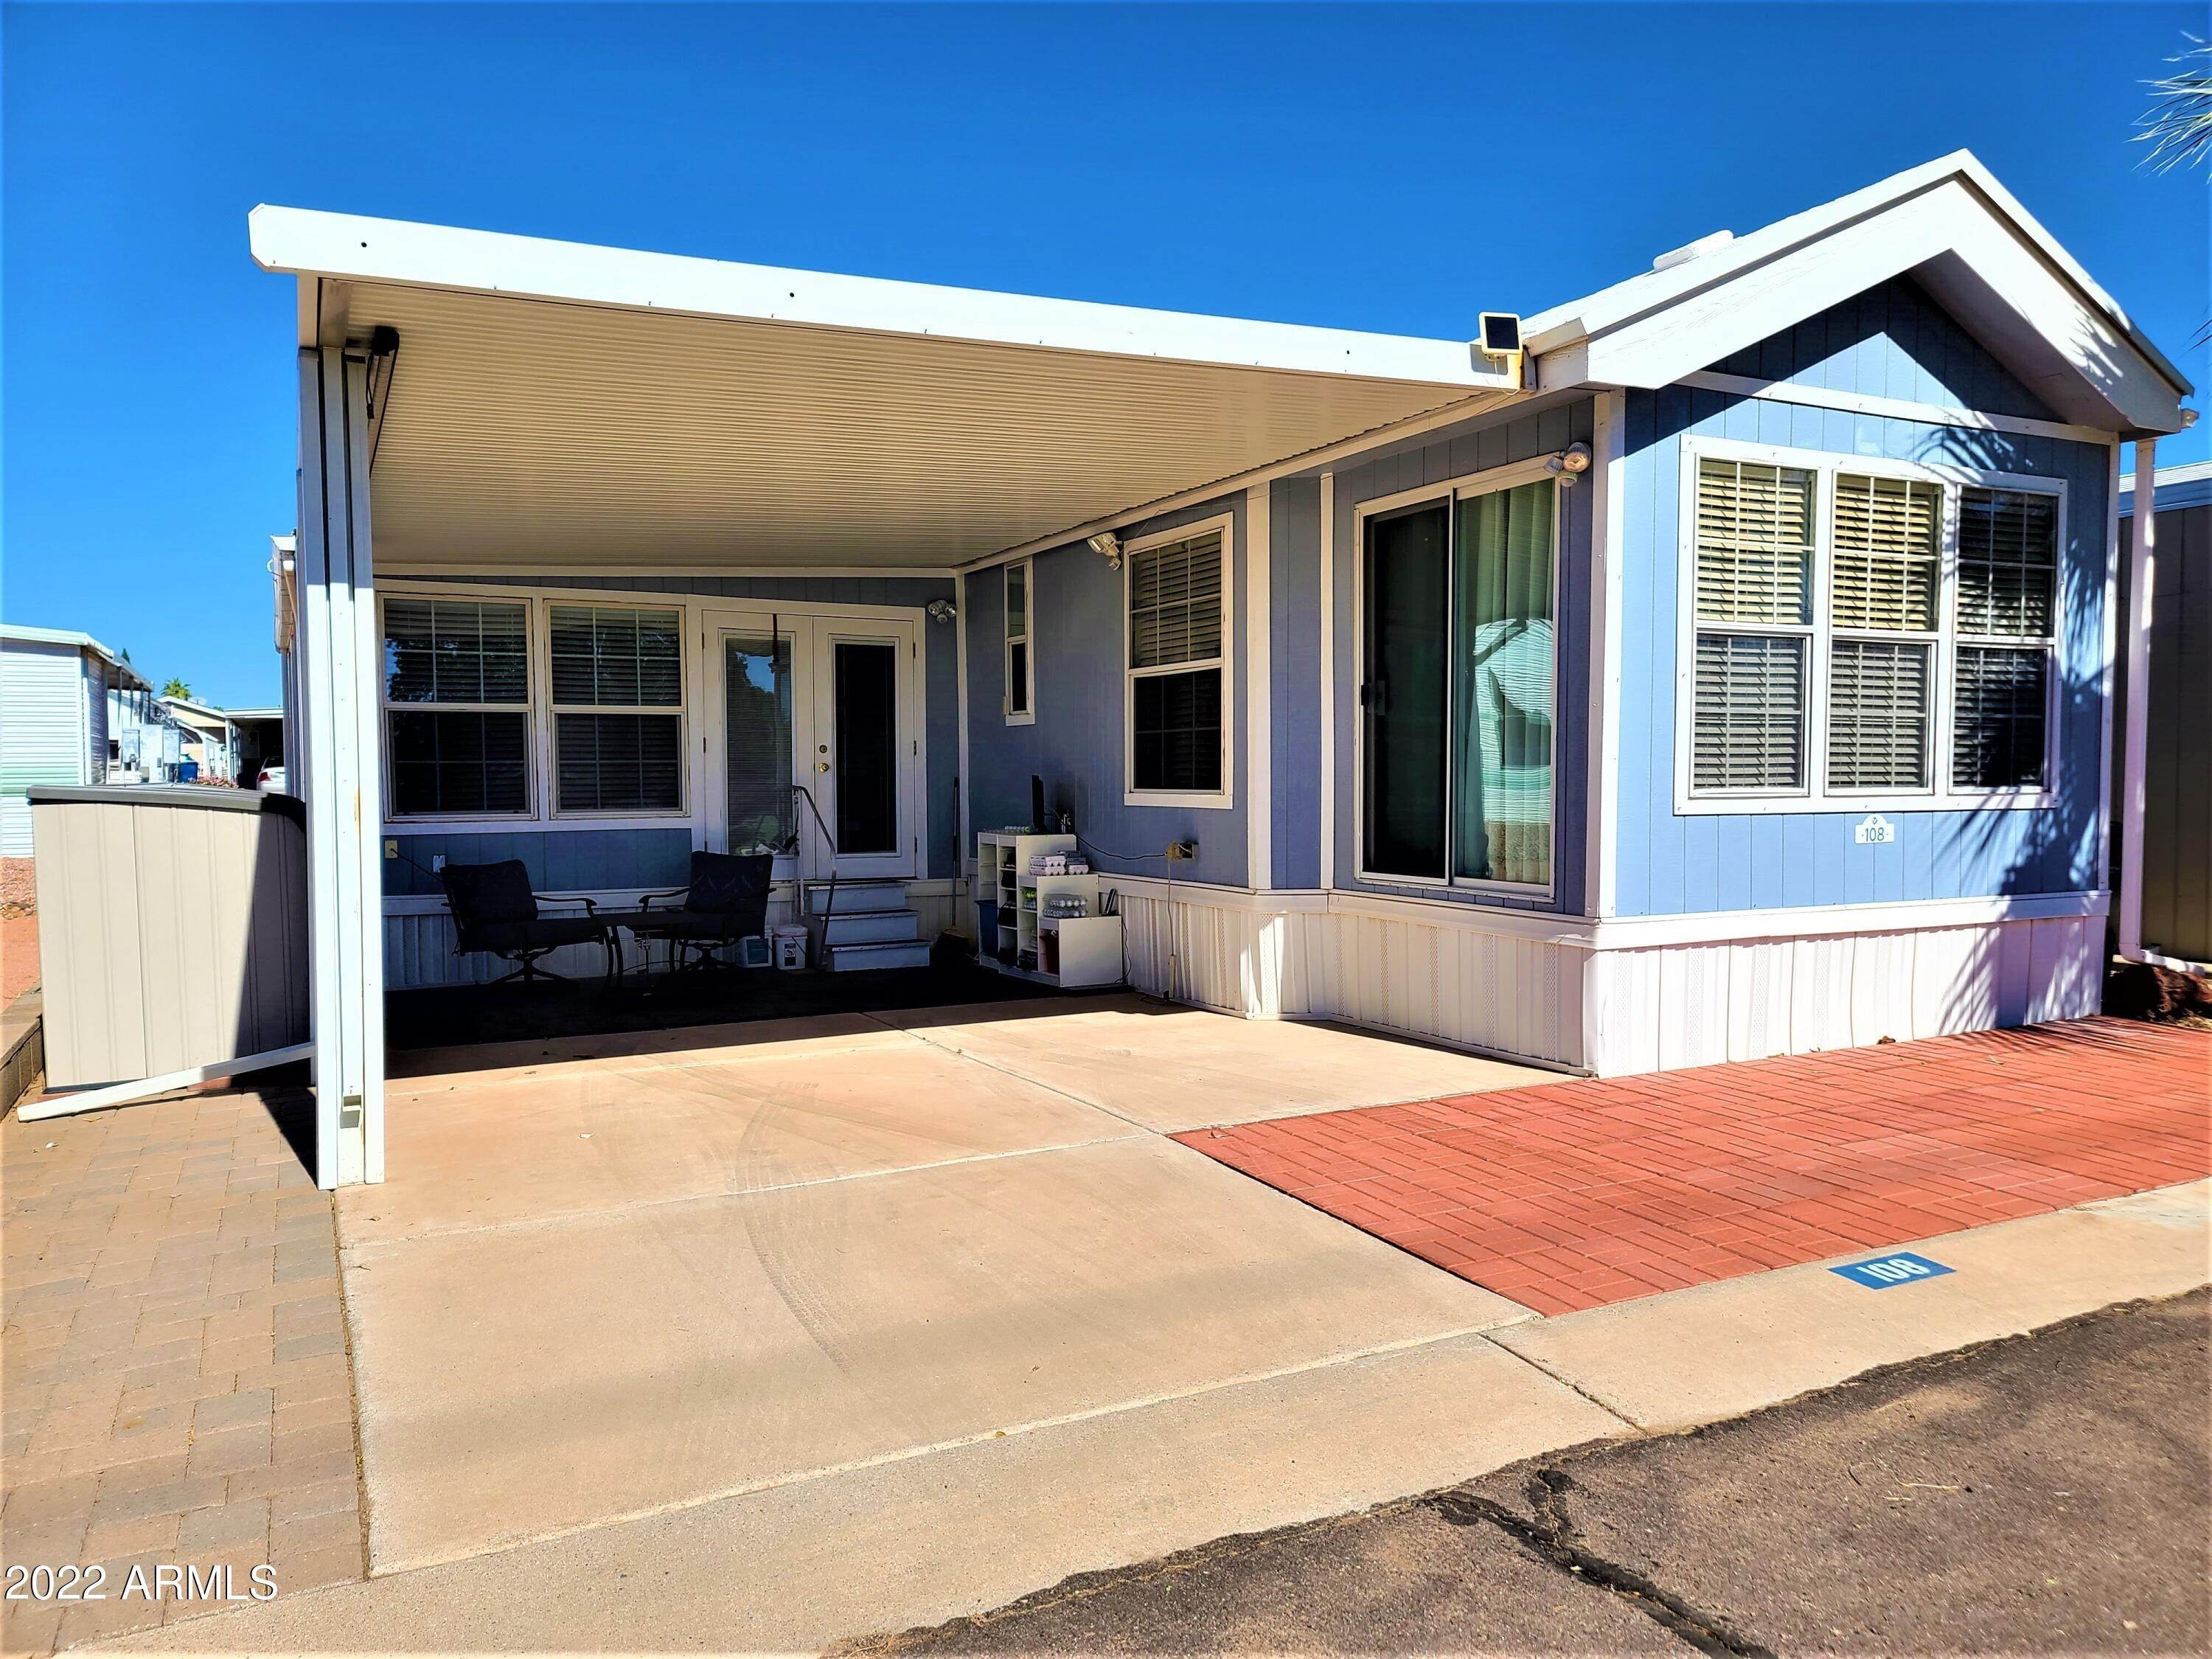 37. Mobile Home for Sale at Mesa, AZ 85207